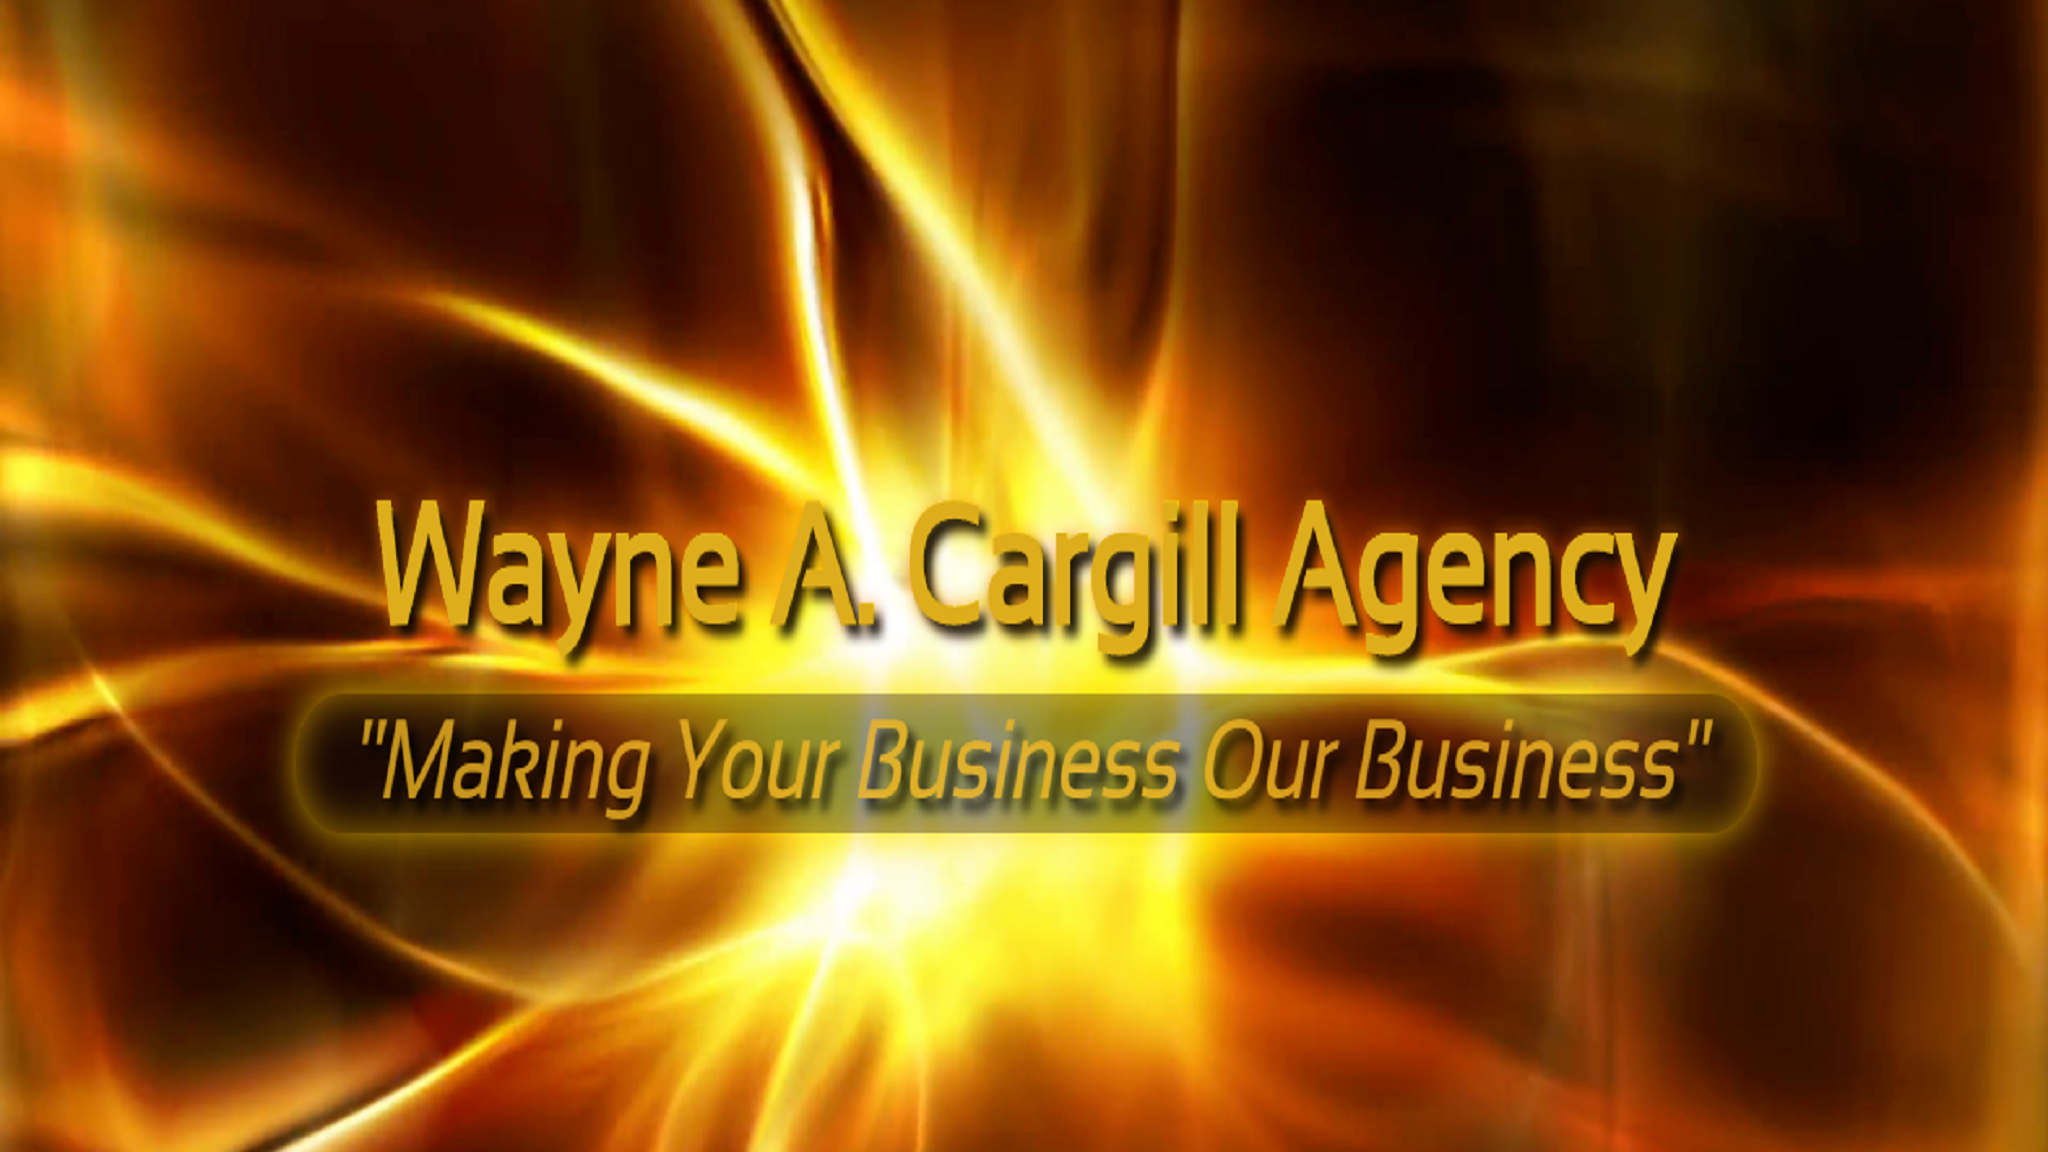 Wayne A. Cargill Agency Goldrod Banner 2048 x 1152